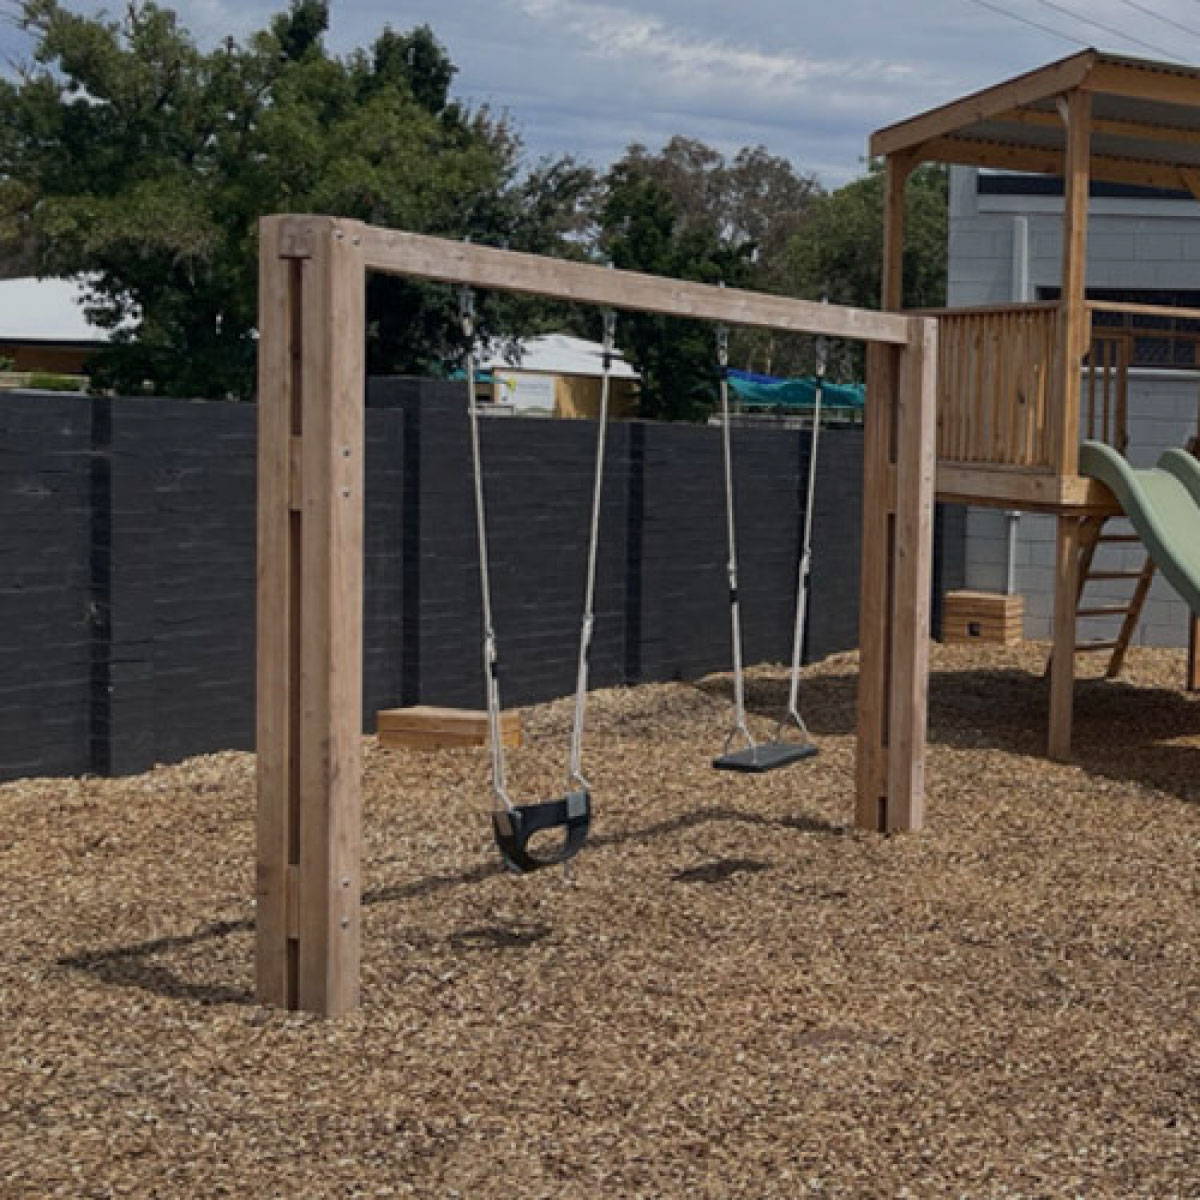 A wooden outdoor swings